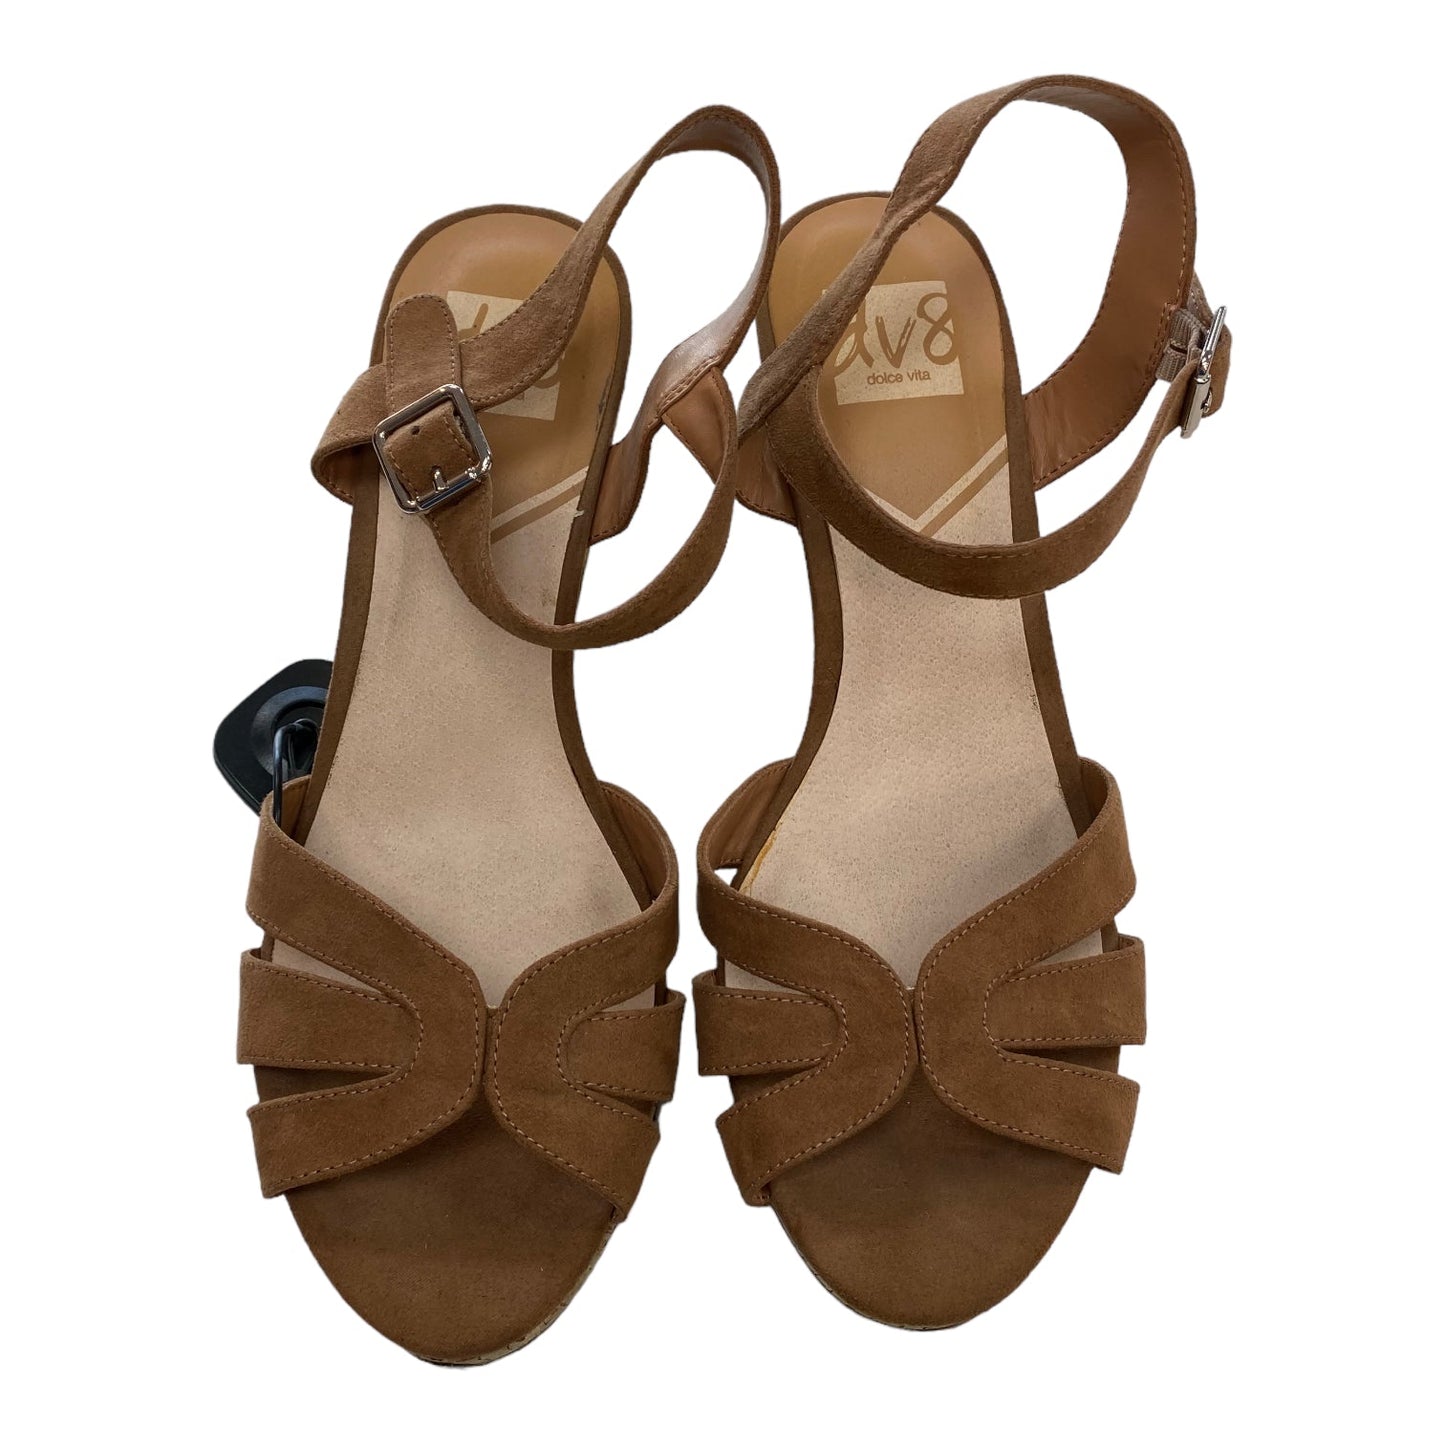 Brown Sandals Heels Wedge Dolce Vita, Size 8.5